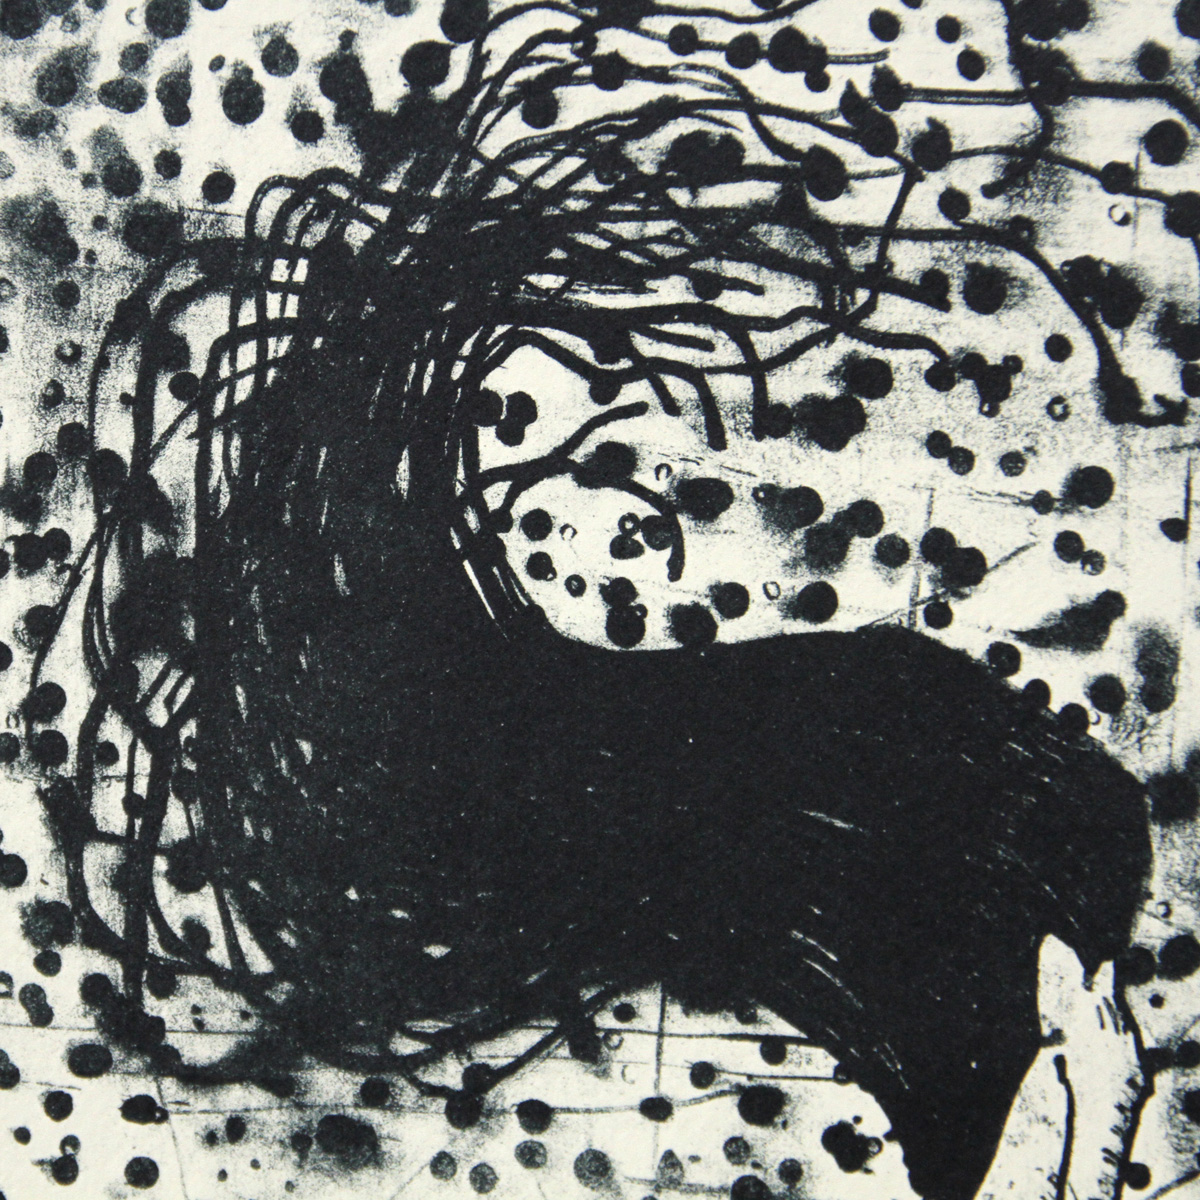 C. Blechschmidt: "Haare im Wind, 8/15", Originale Grafik/Lithographie